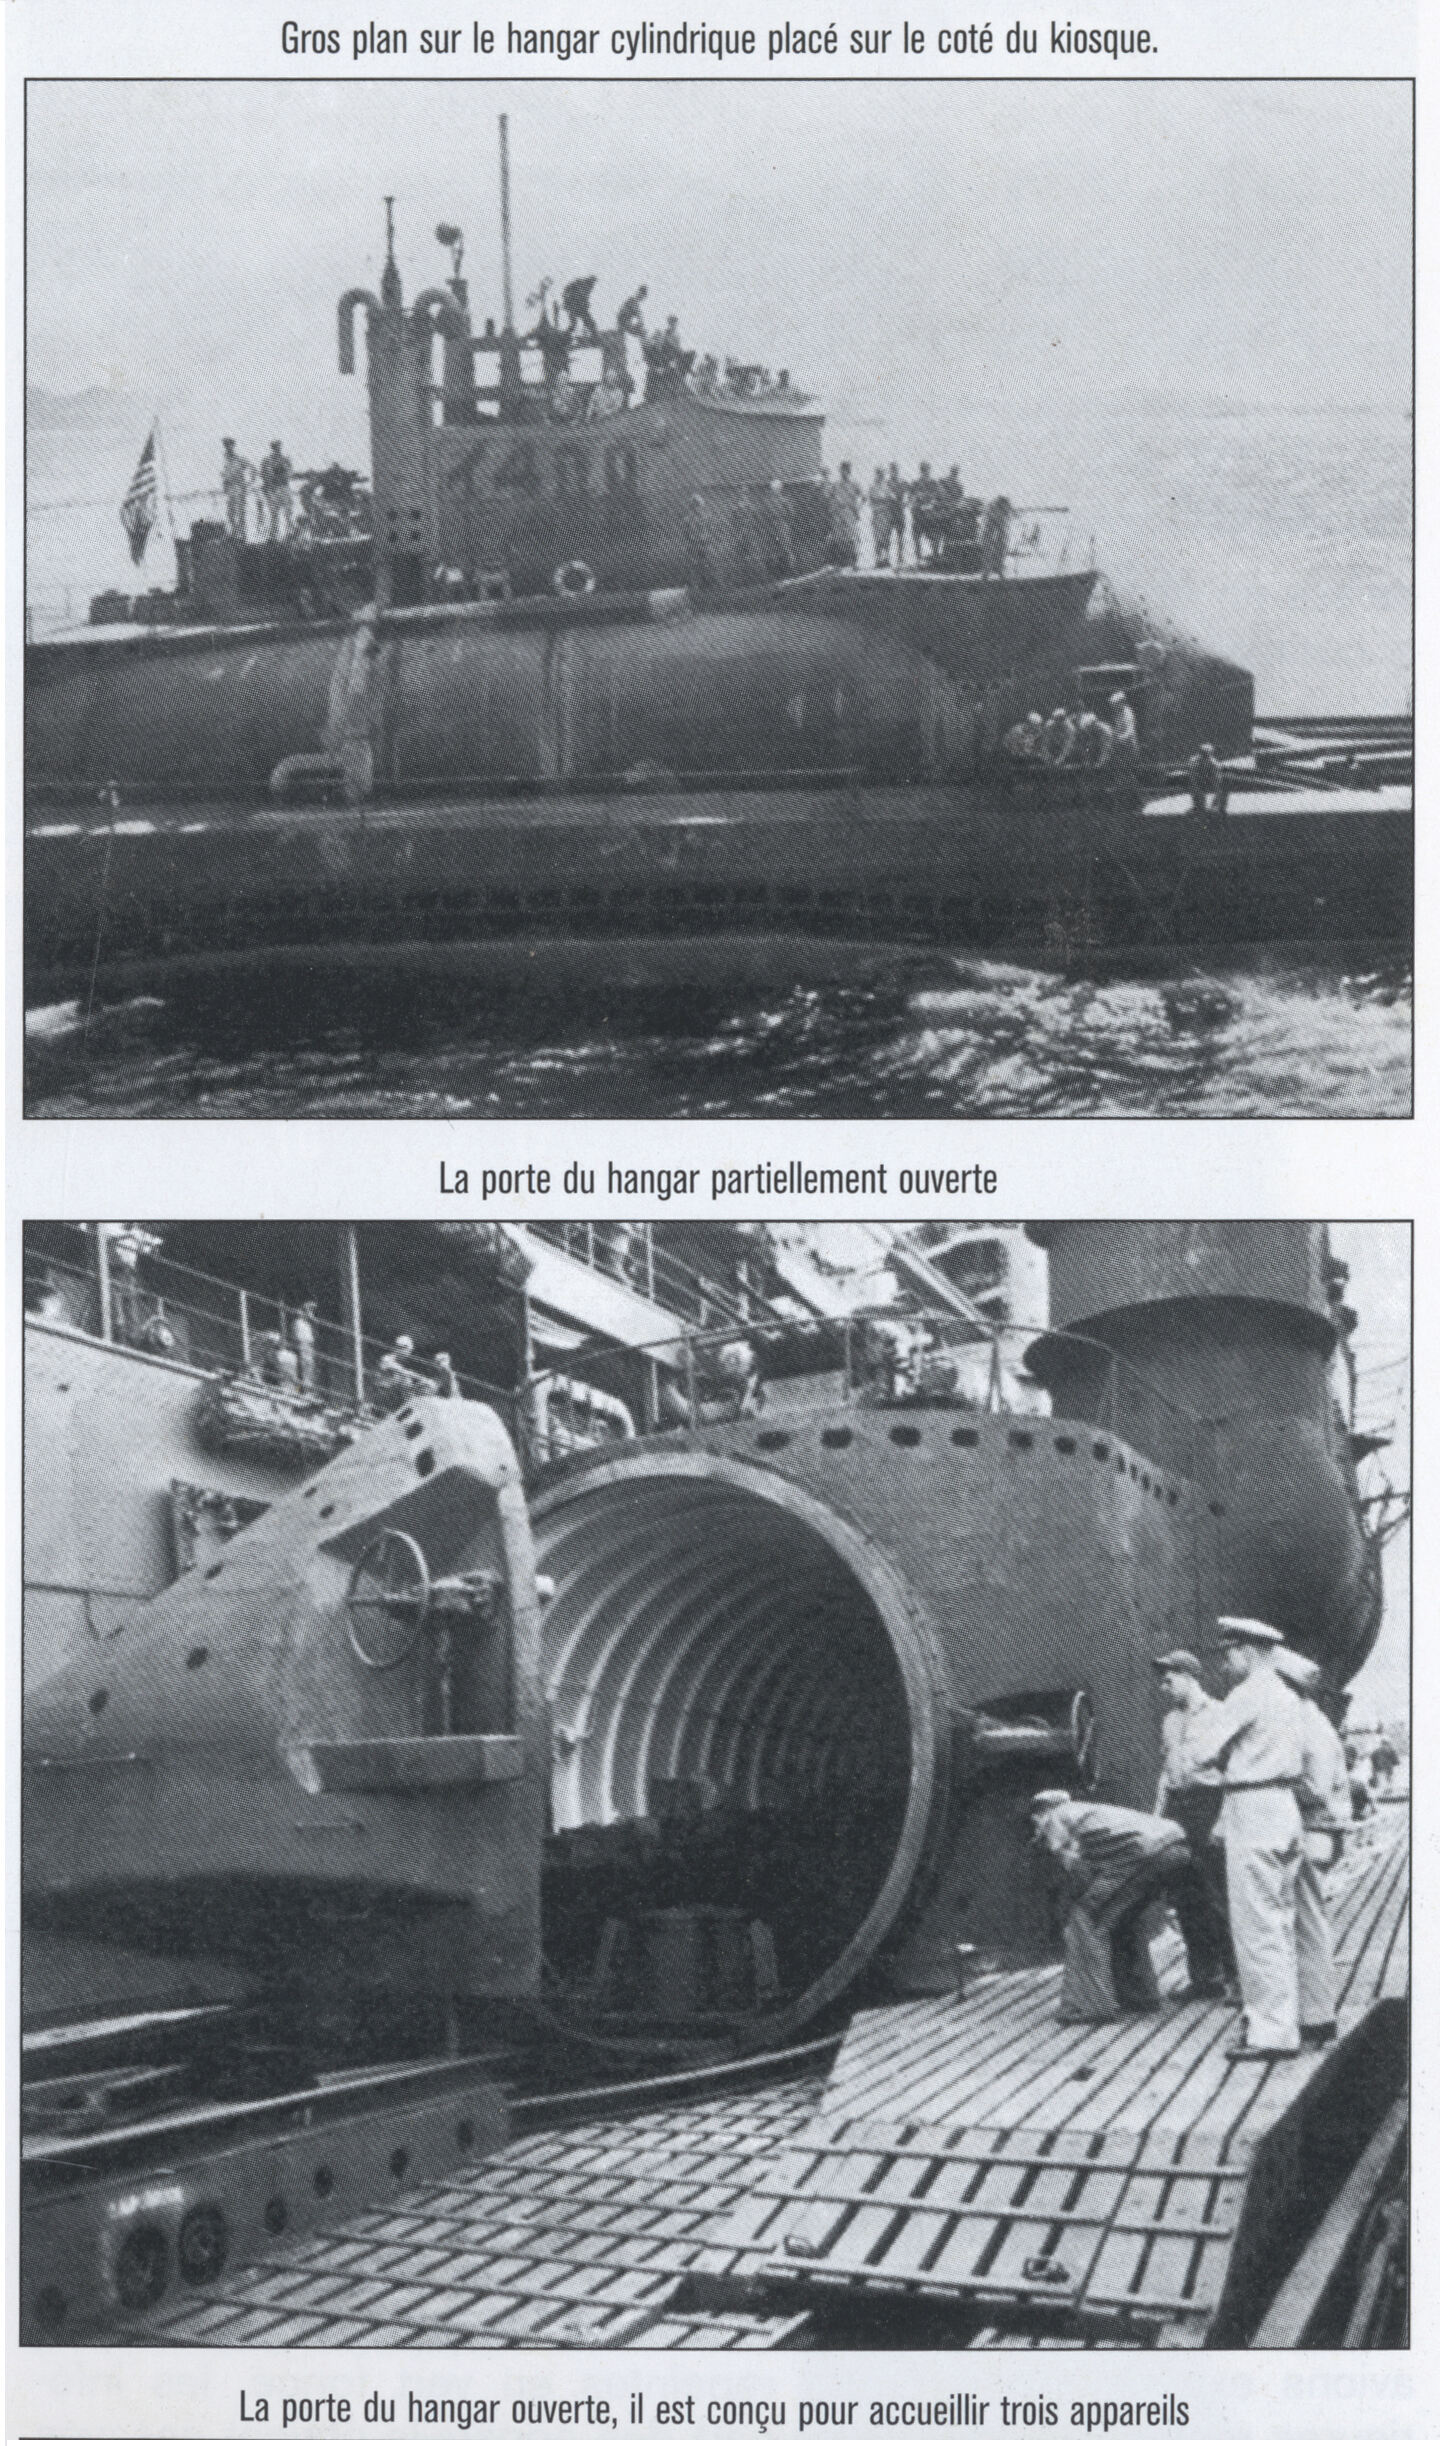  [Concours " Guerre du Pacifique 1941-1945] - Aichi M6A1 Seiran - Tamiya - 1/48 - Page 2 I-401_10